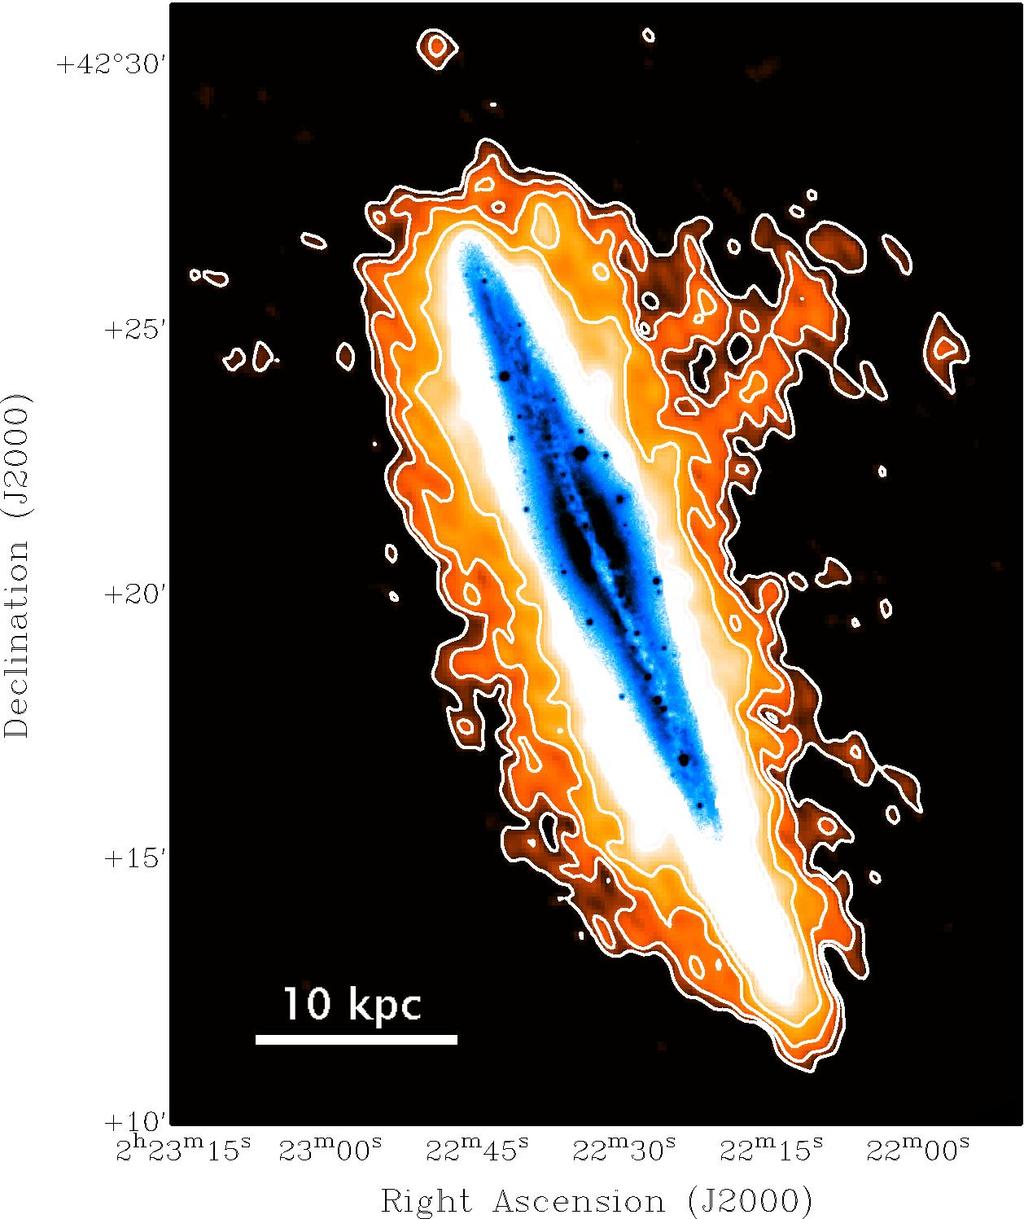 Extra-planar gas NGC 891 Hα, optical R,